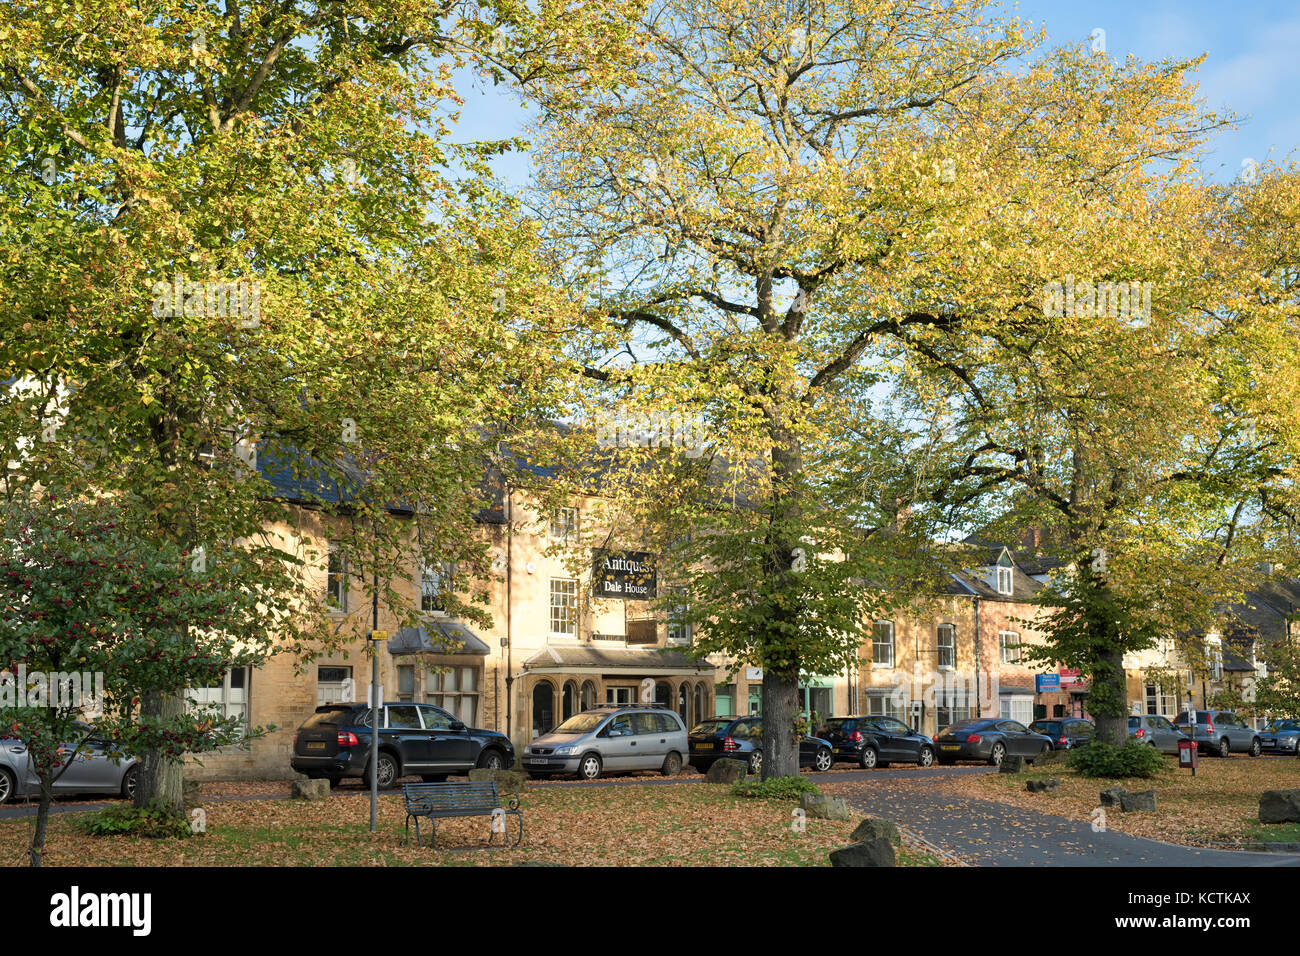 Moreton in Marsh high street con gli alberi a cambiare colore in autunno. Moreton in Marsh, Cotswolds, Gloucestershire, Inghilterra Foto Stock